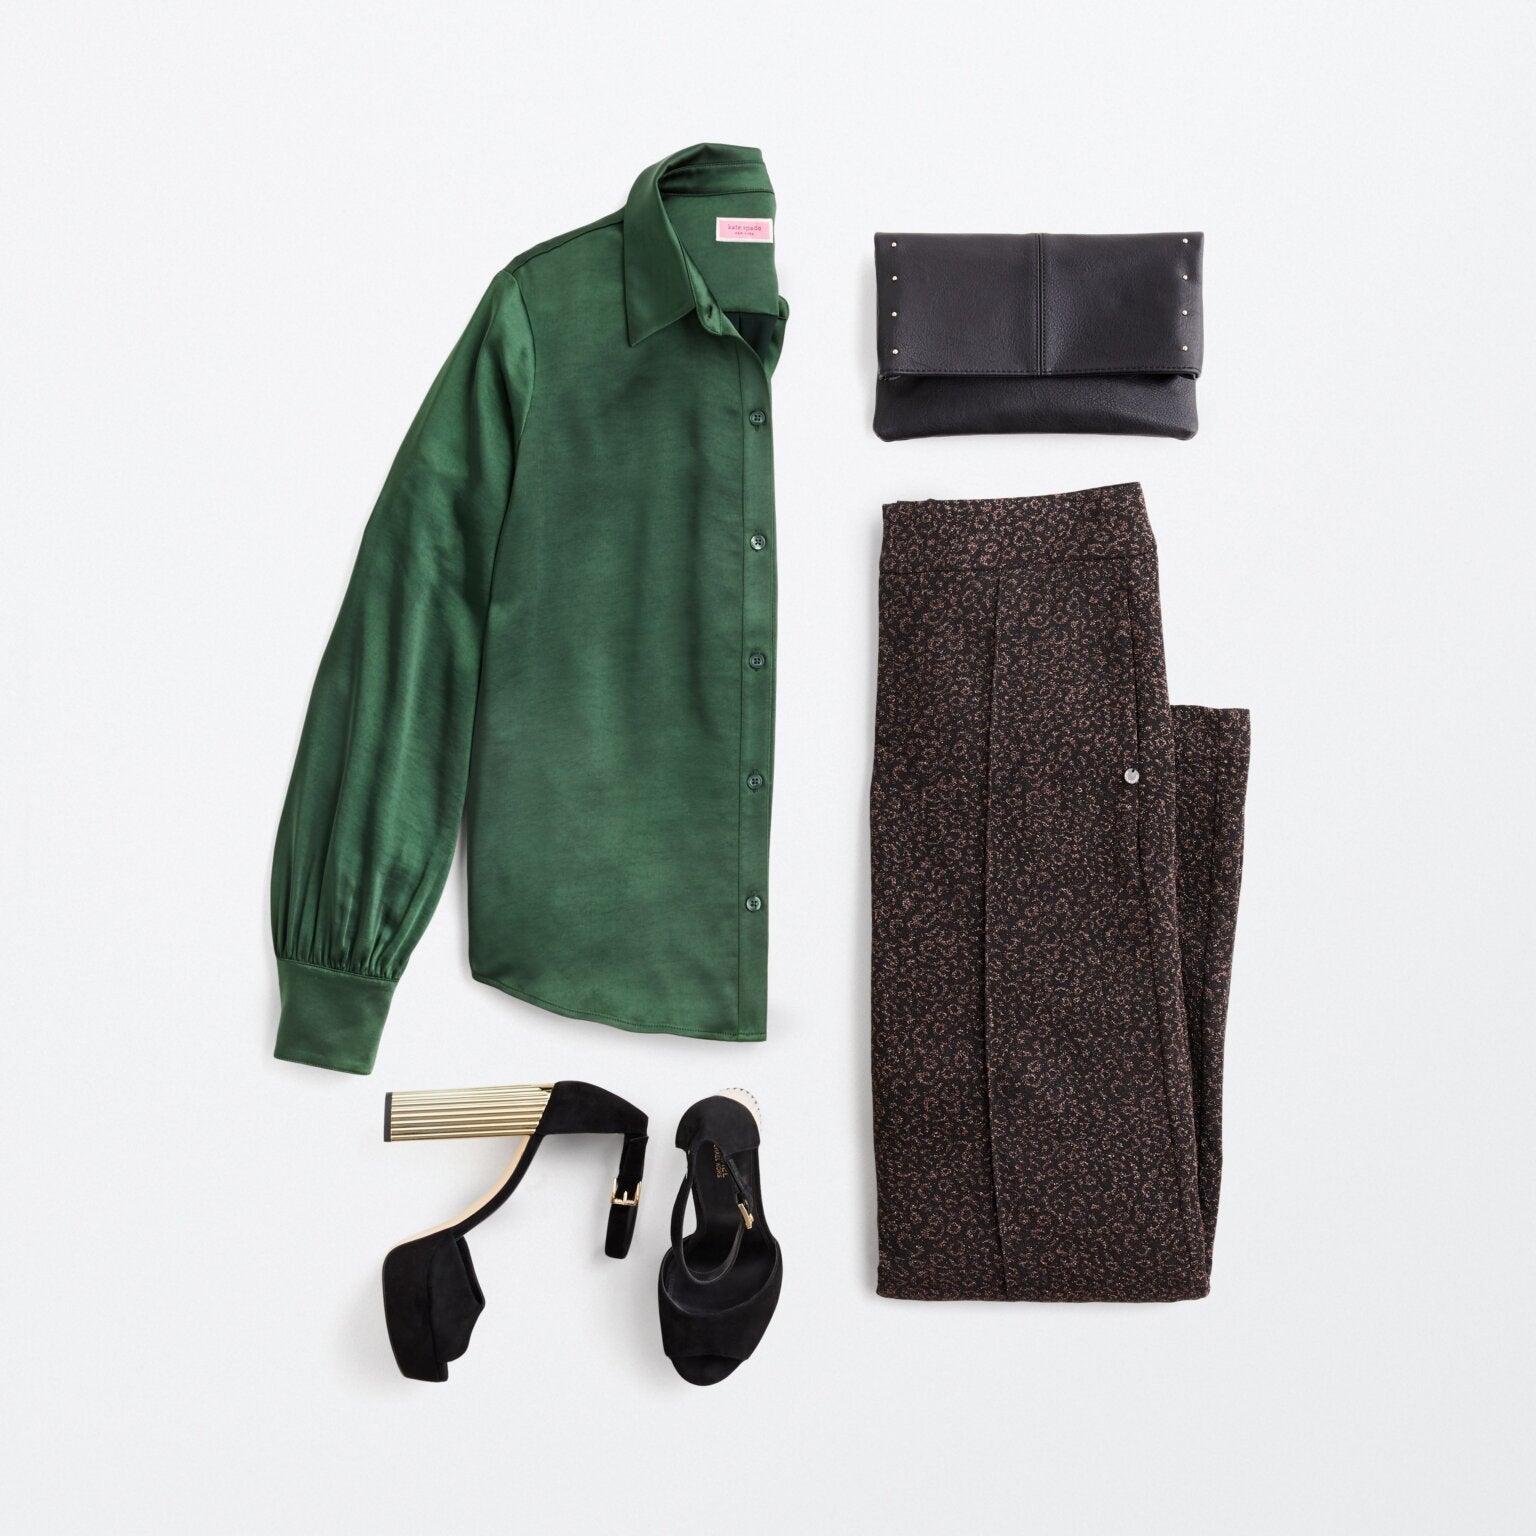 Jewel tone - Emerald Green - Green blouse flat lay, trouser, black bag, heels